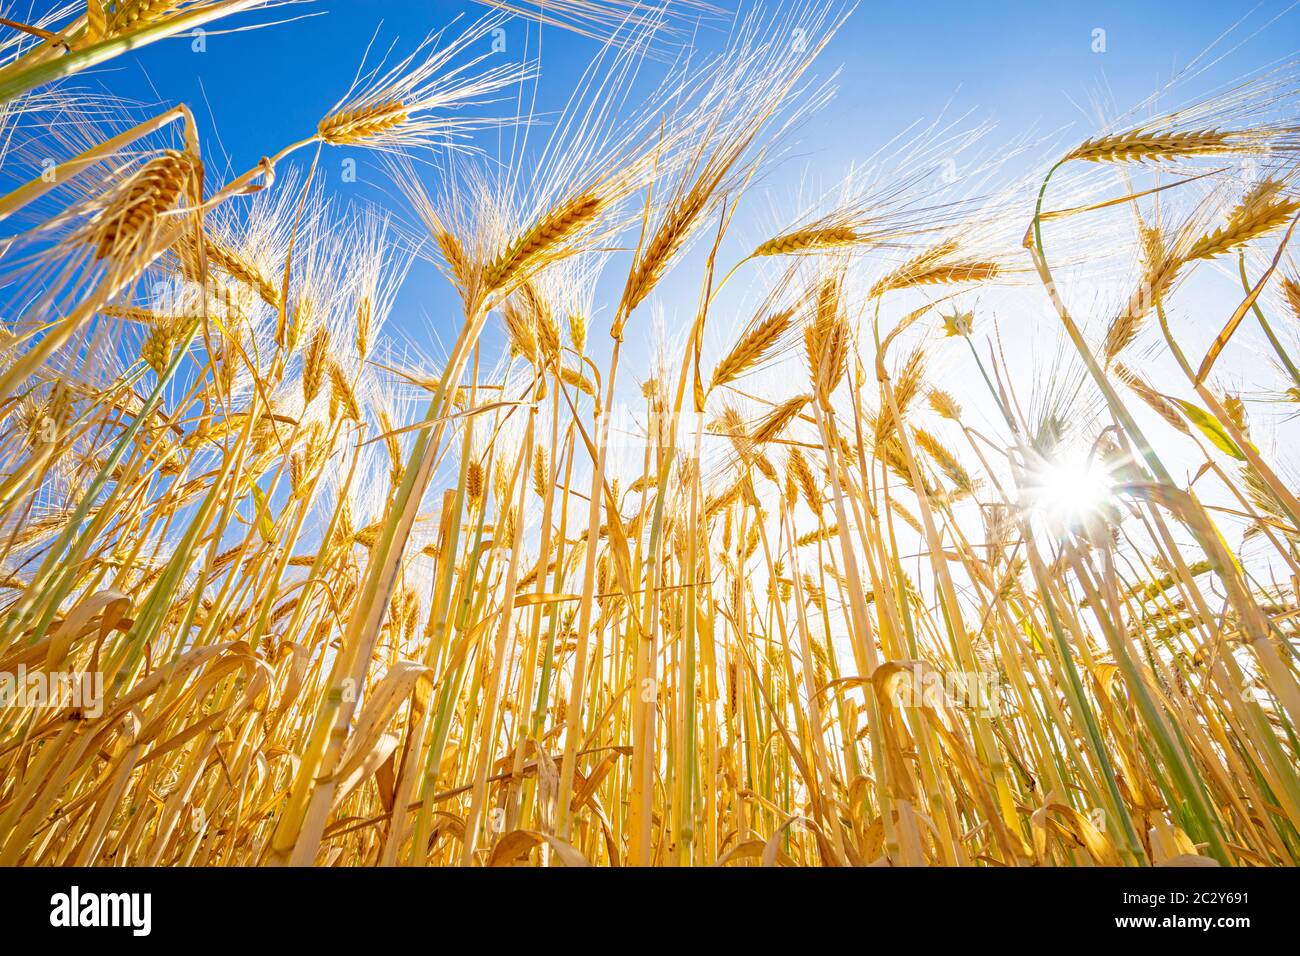 Barley field, Grain field in the sun Stock Photo